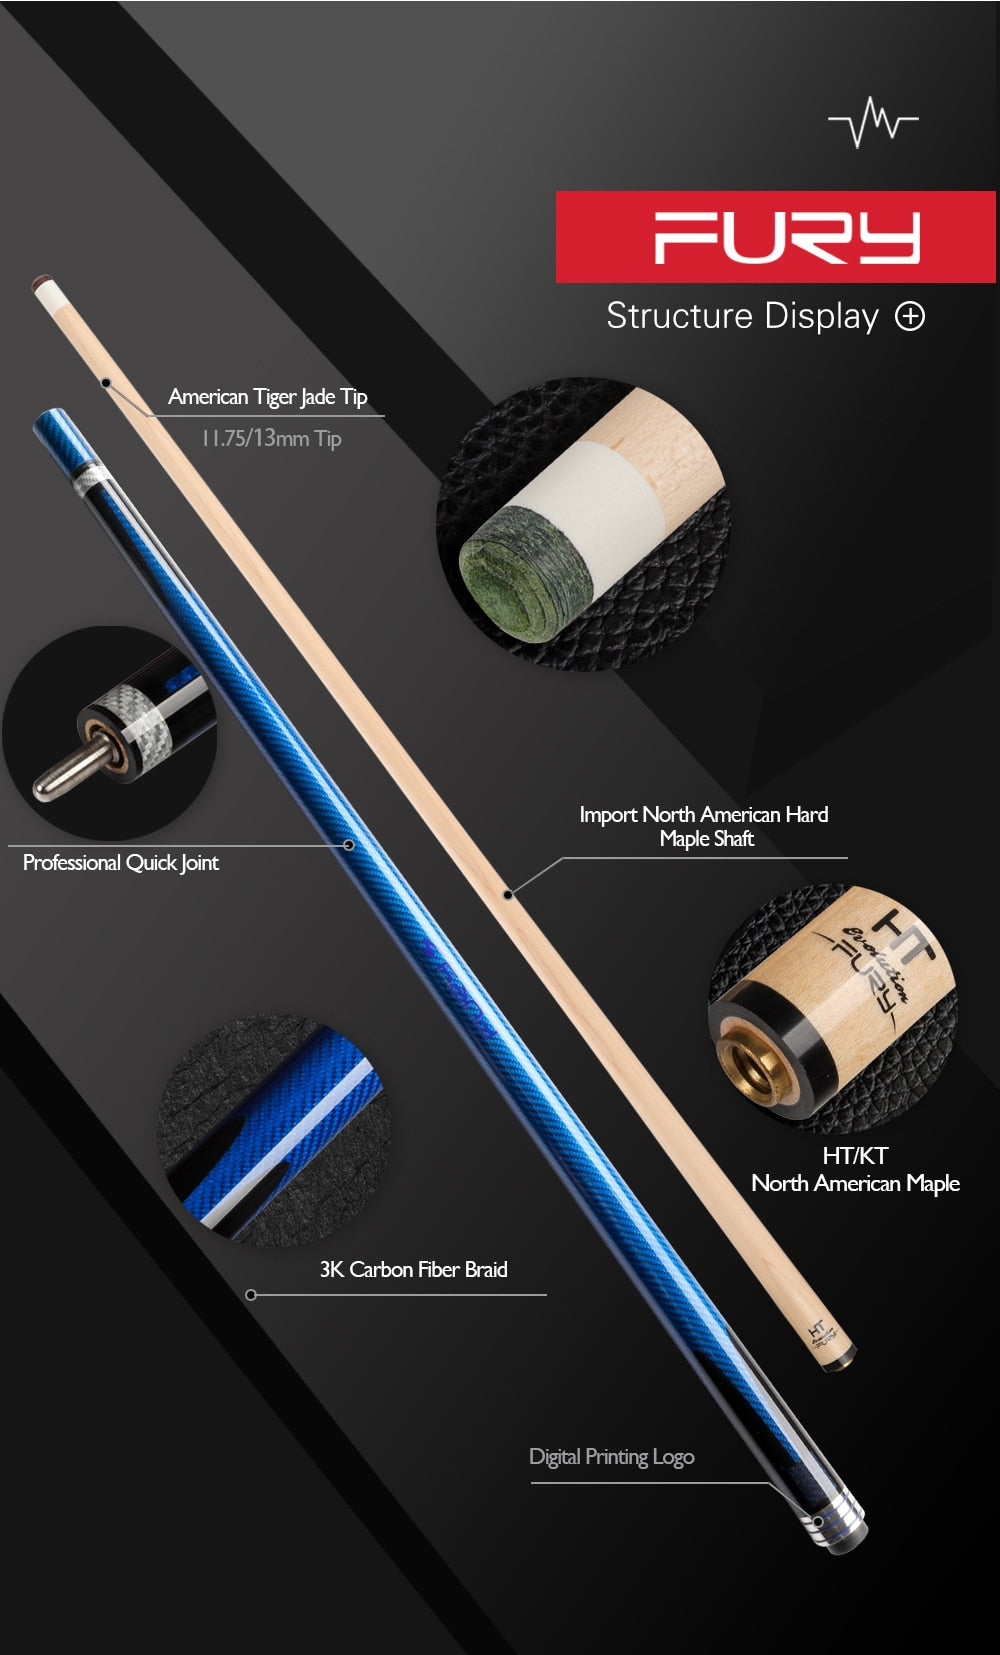 FURY FG Billiard Pool Cue Stick 11.75mm/13mm Tip Carbon Fiber Braided Grip Billiard Cue Stick Kit for Professional Athlete